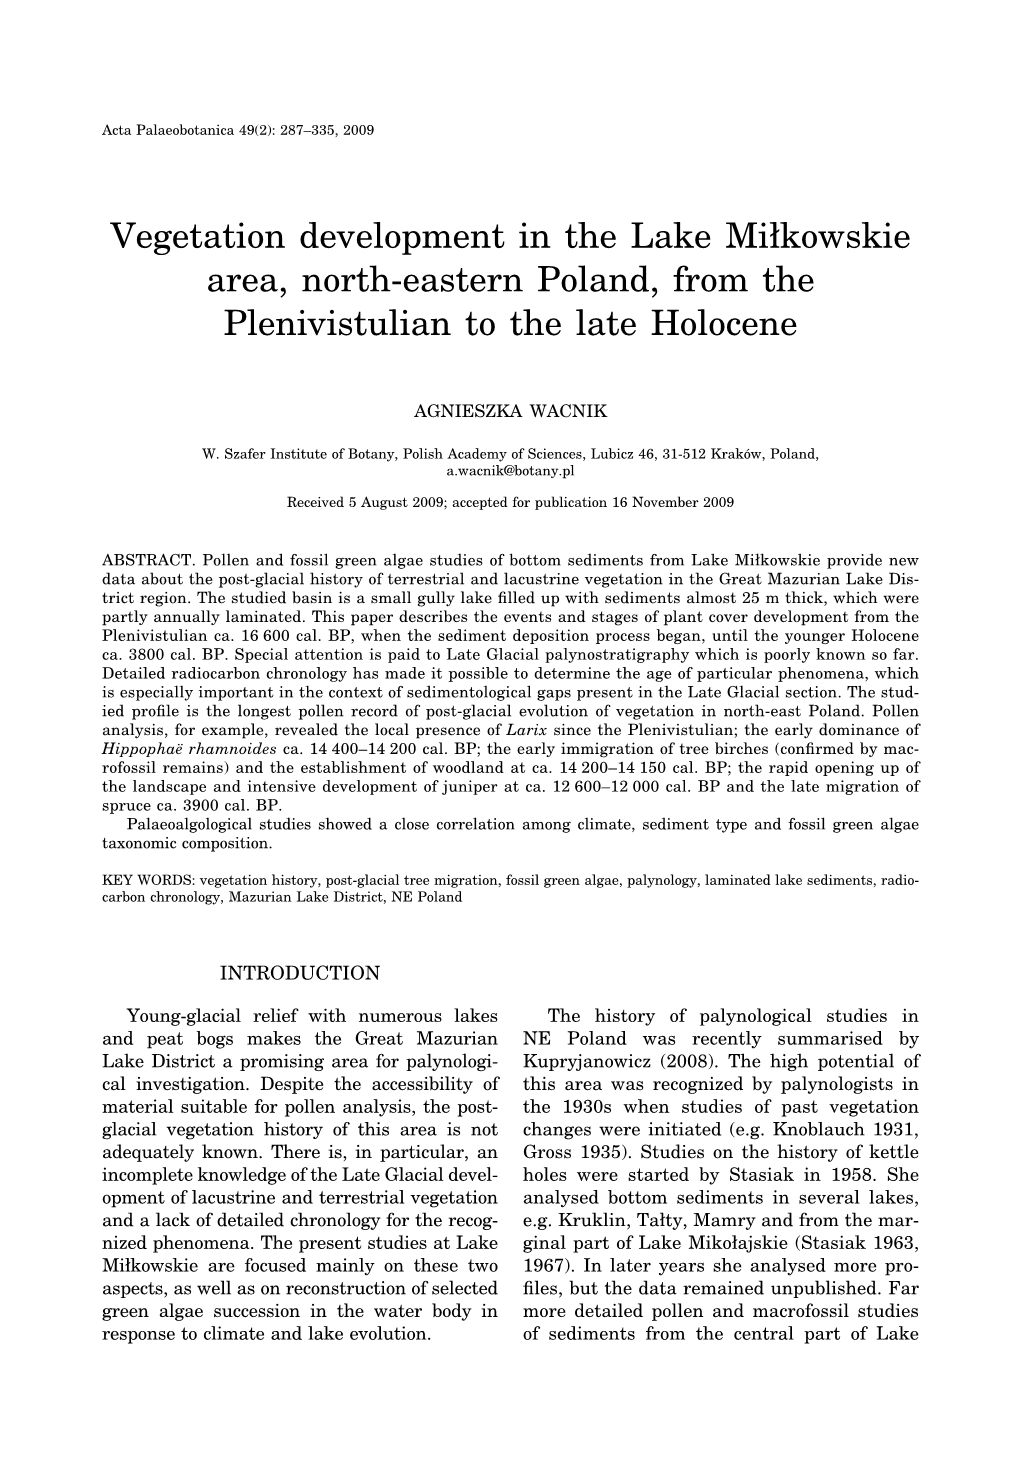 Vegetation Development in the Lake Miłkowskie Area, North-Eastern Poland, from the Plenivistulian to the Late Holocene